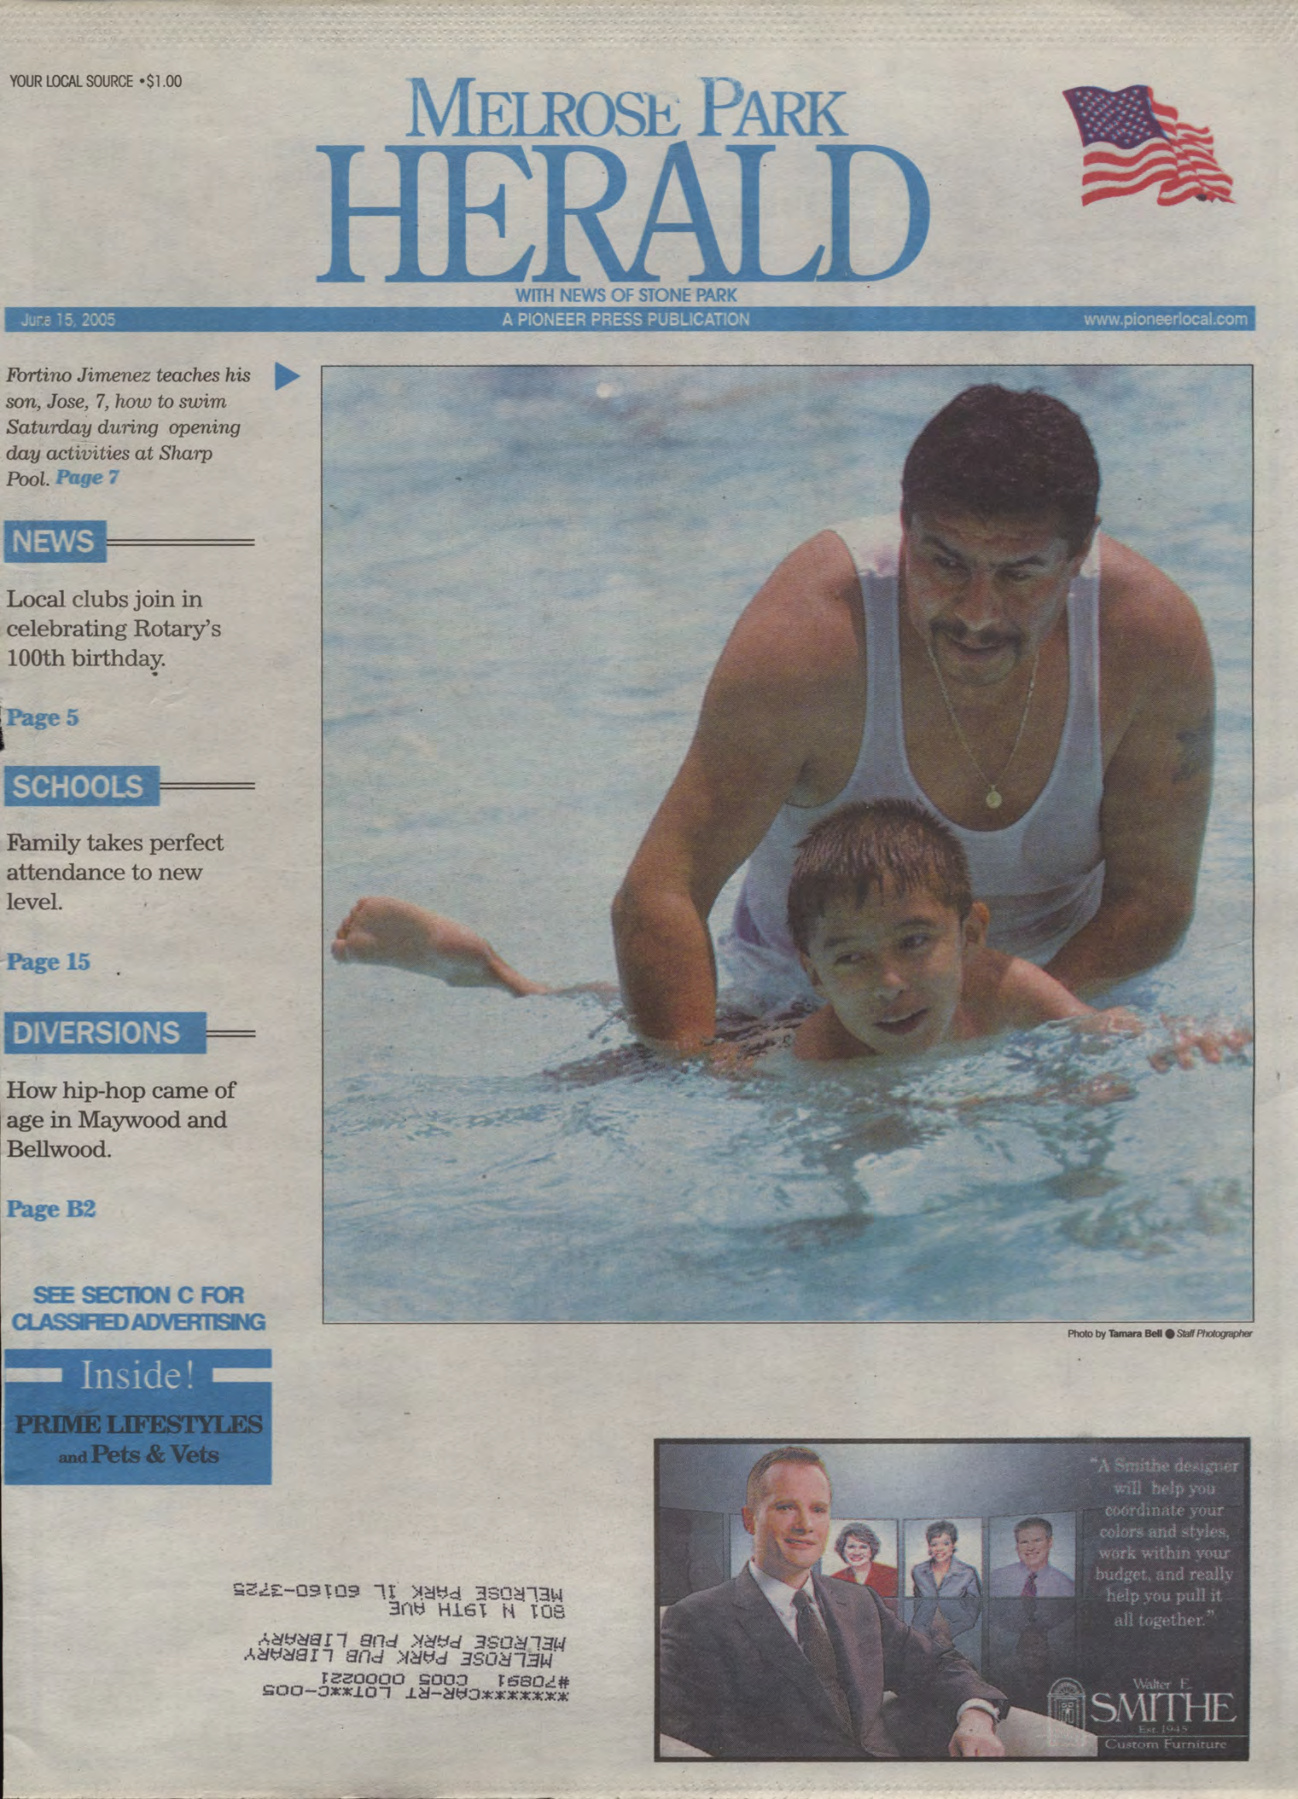 The Herald – 20050615